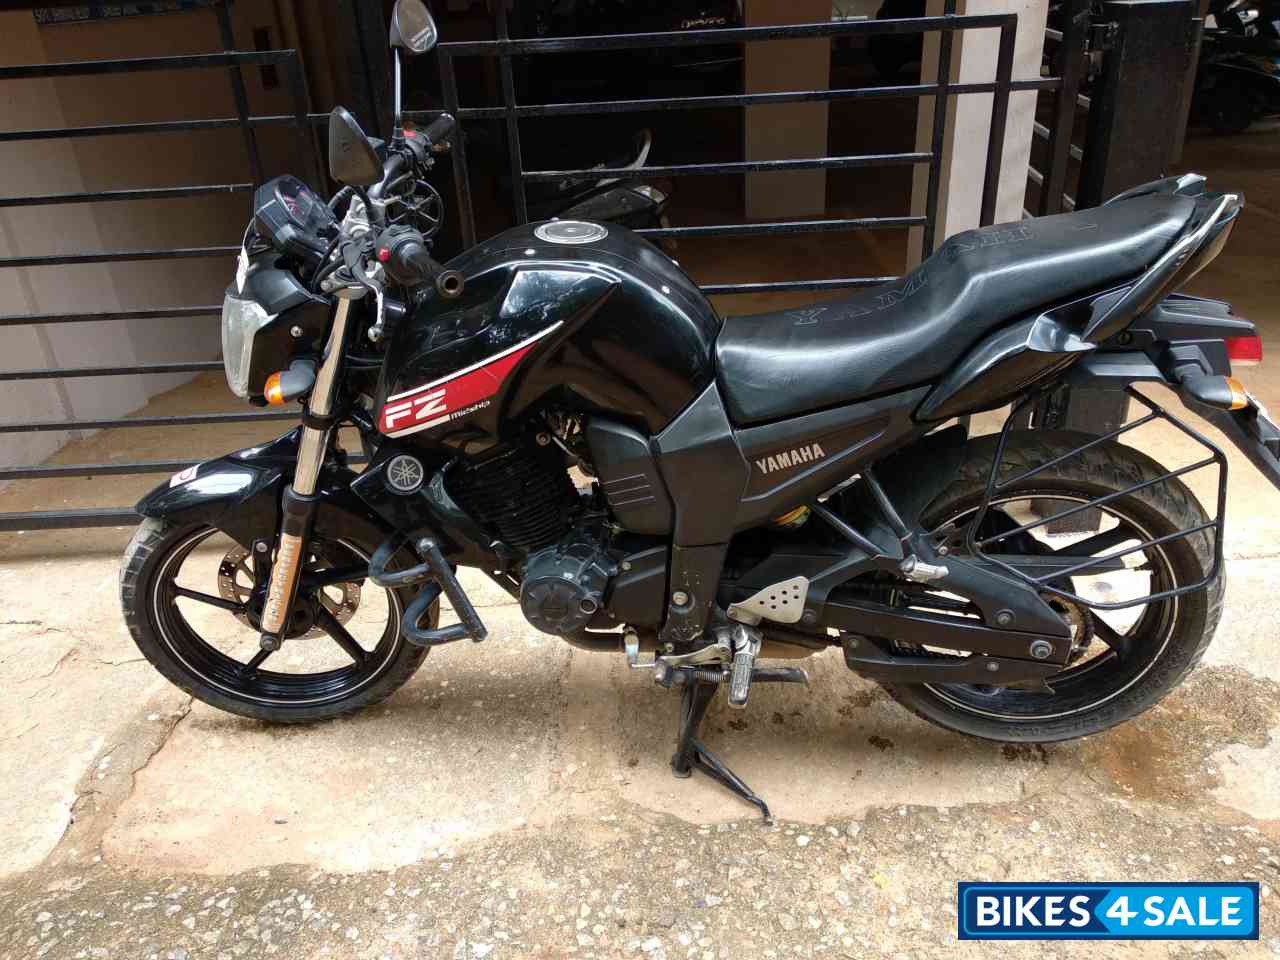 Used 2014 model Yamaha FZ16 for sale in Bangalore. ID 181644 - Bikes4Sale